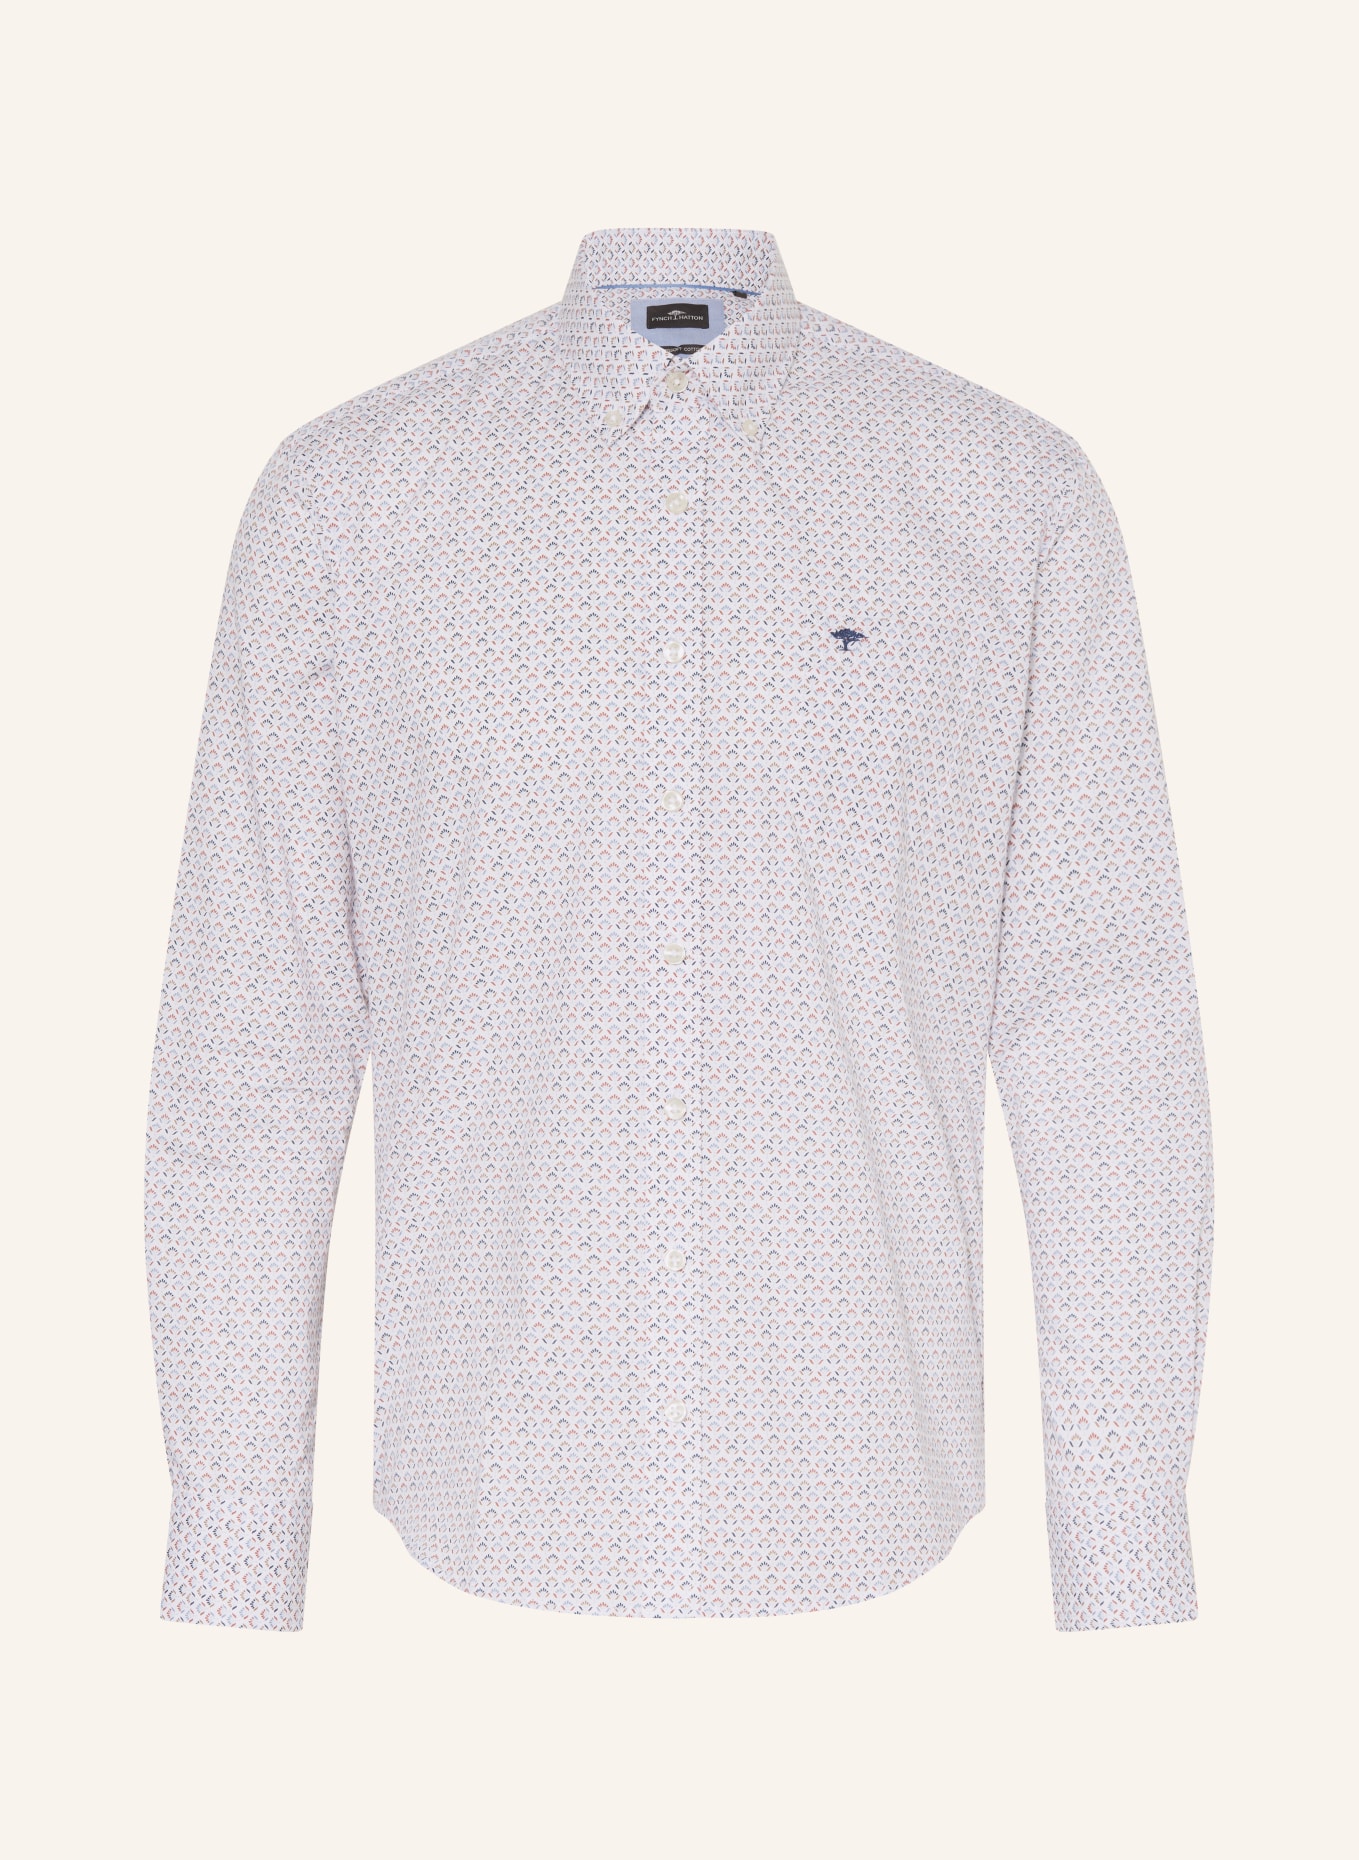 FYNCH-HATTON Hemd Regular Fit, Farbe: WEISS/ BLAU/ ROT (Bild 1)